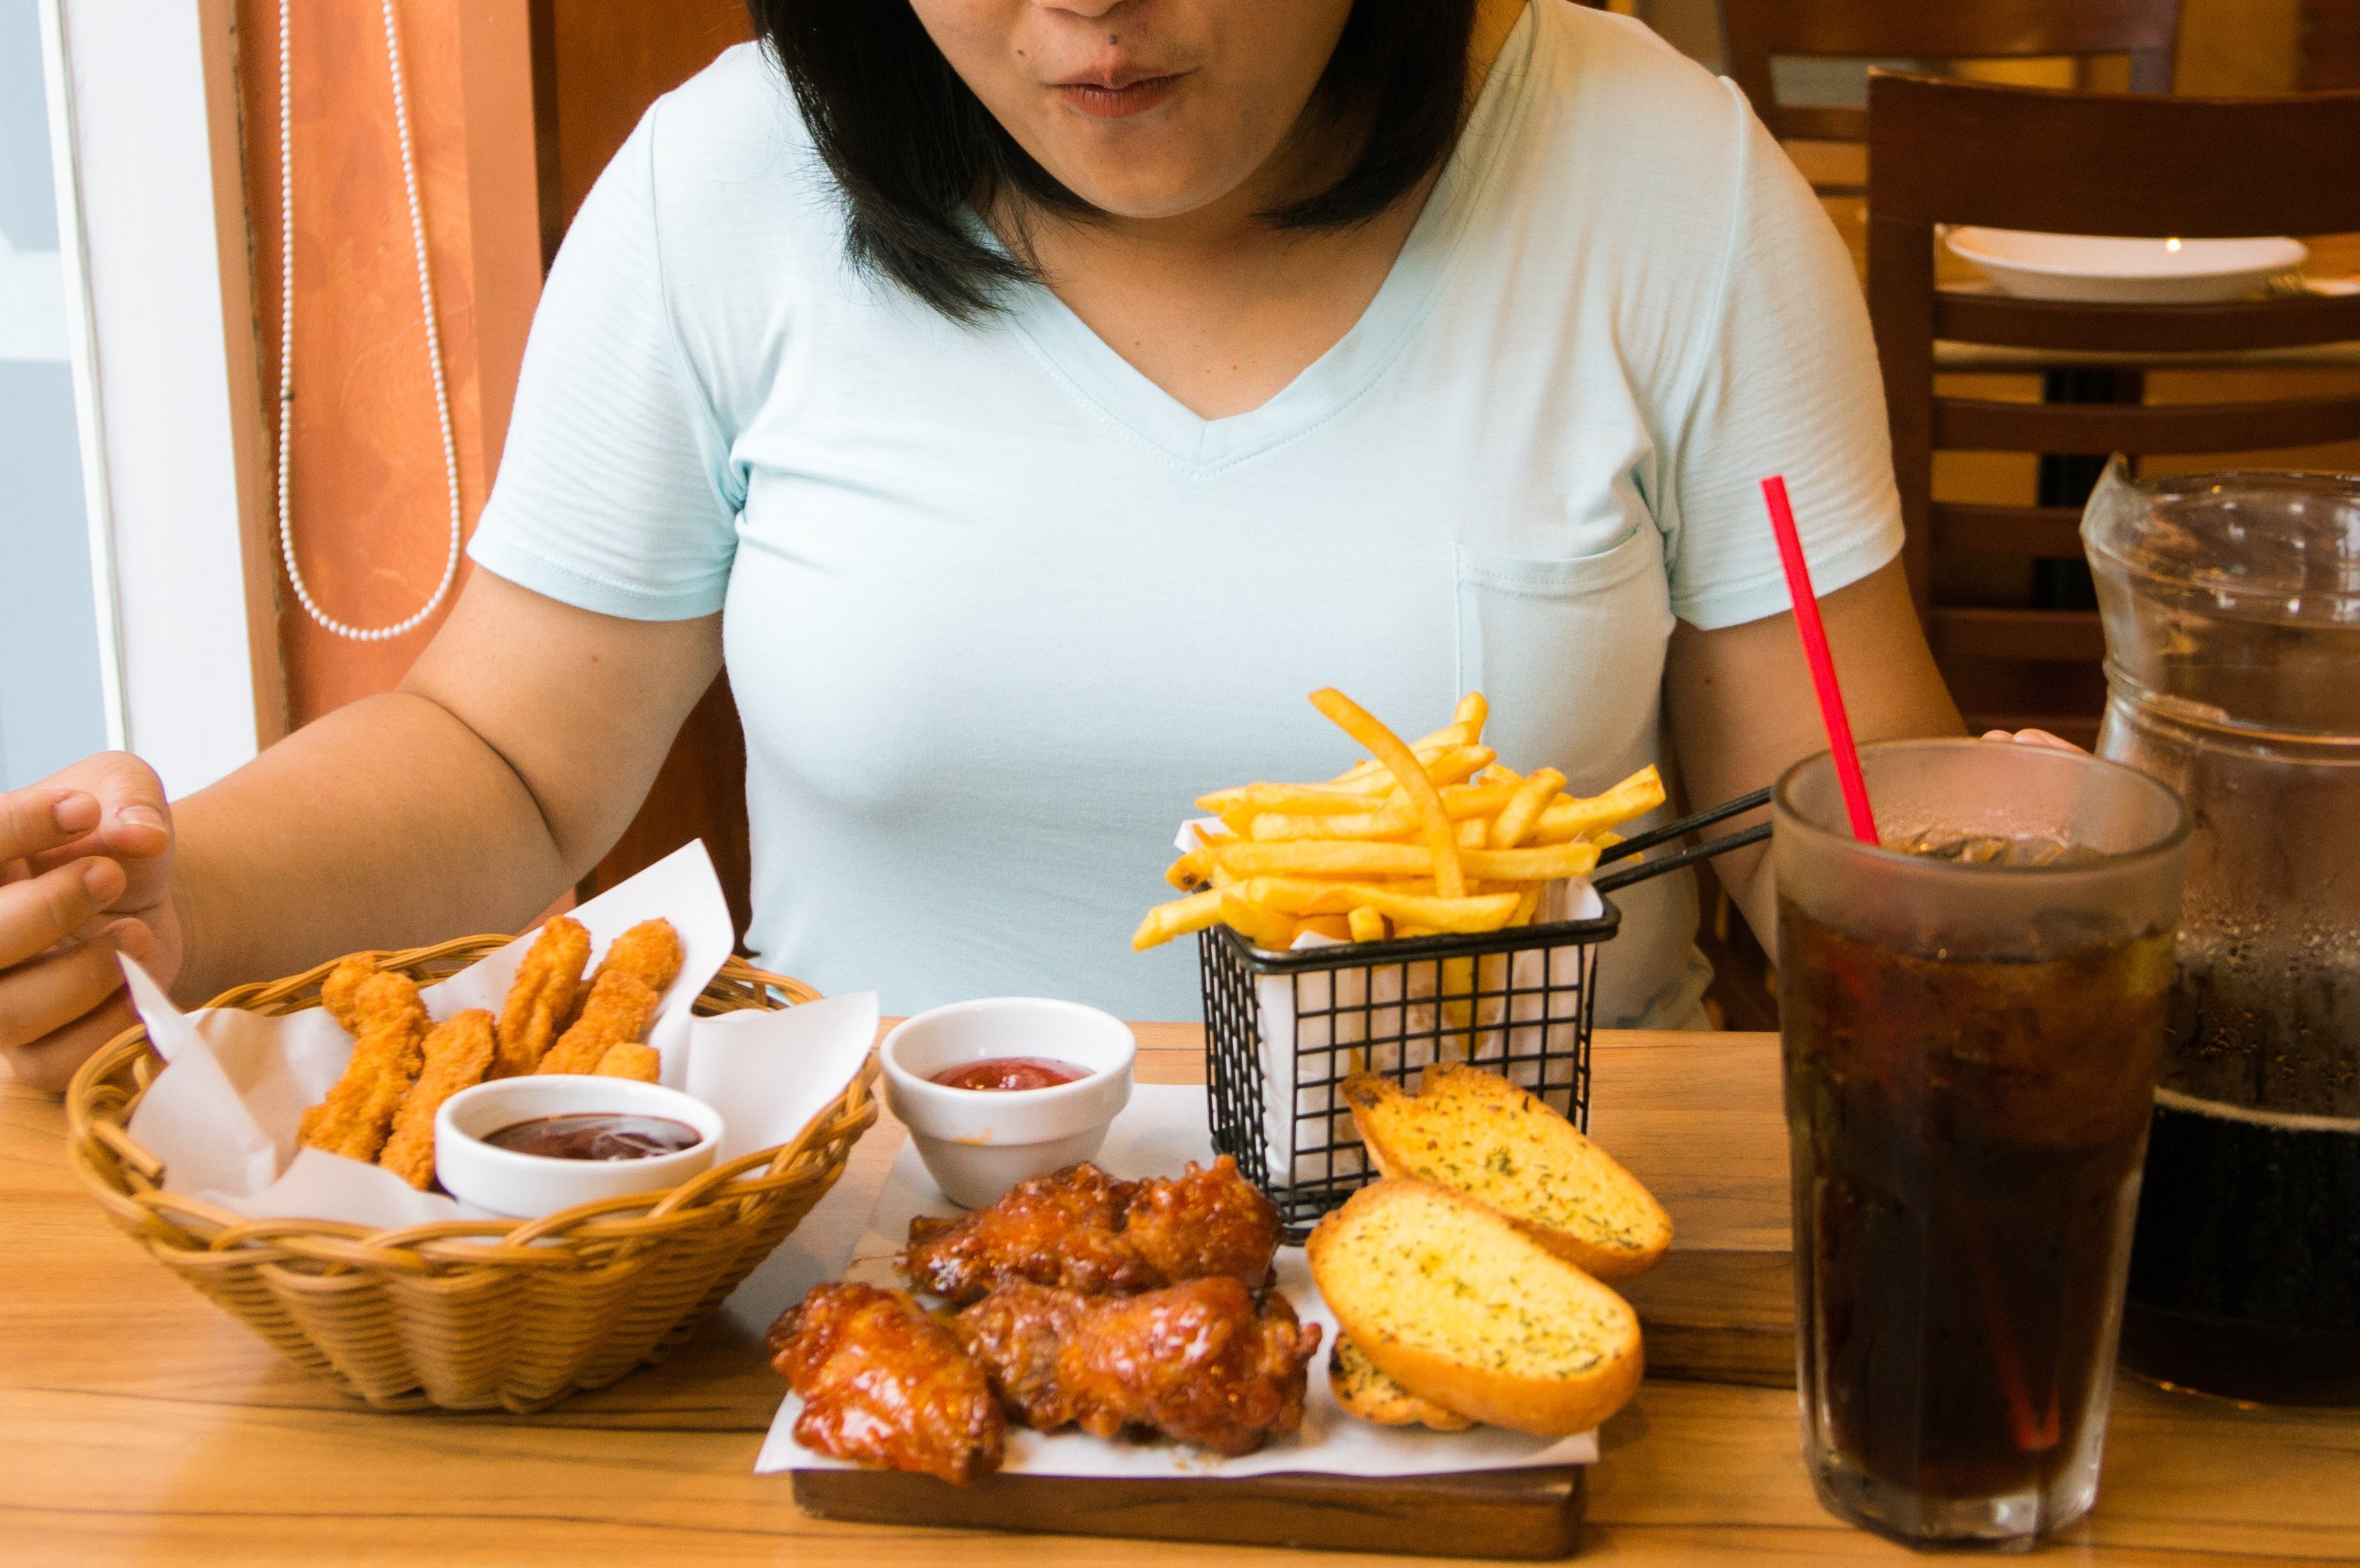 Overweight woman eating junk food | Photo: Shutterstock.com